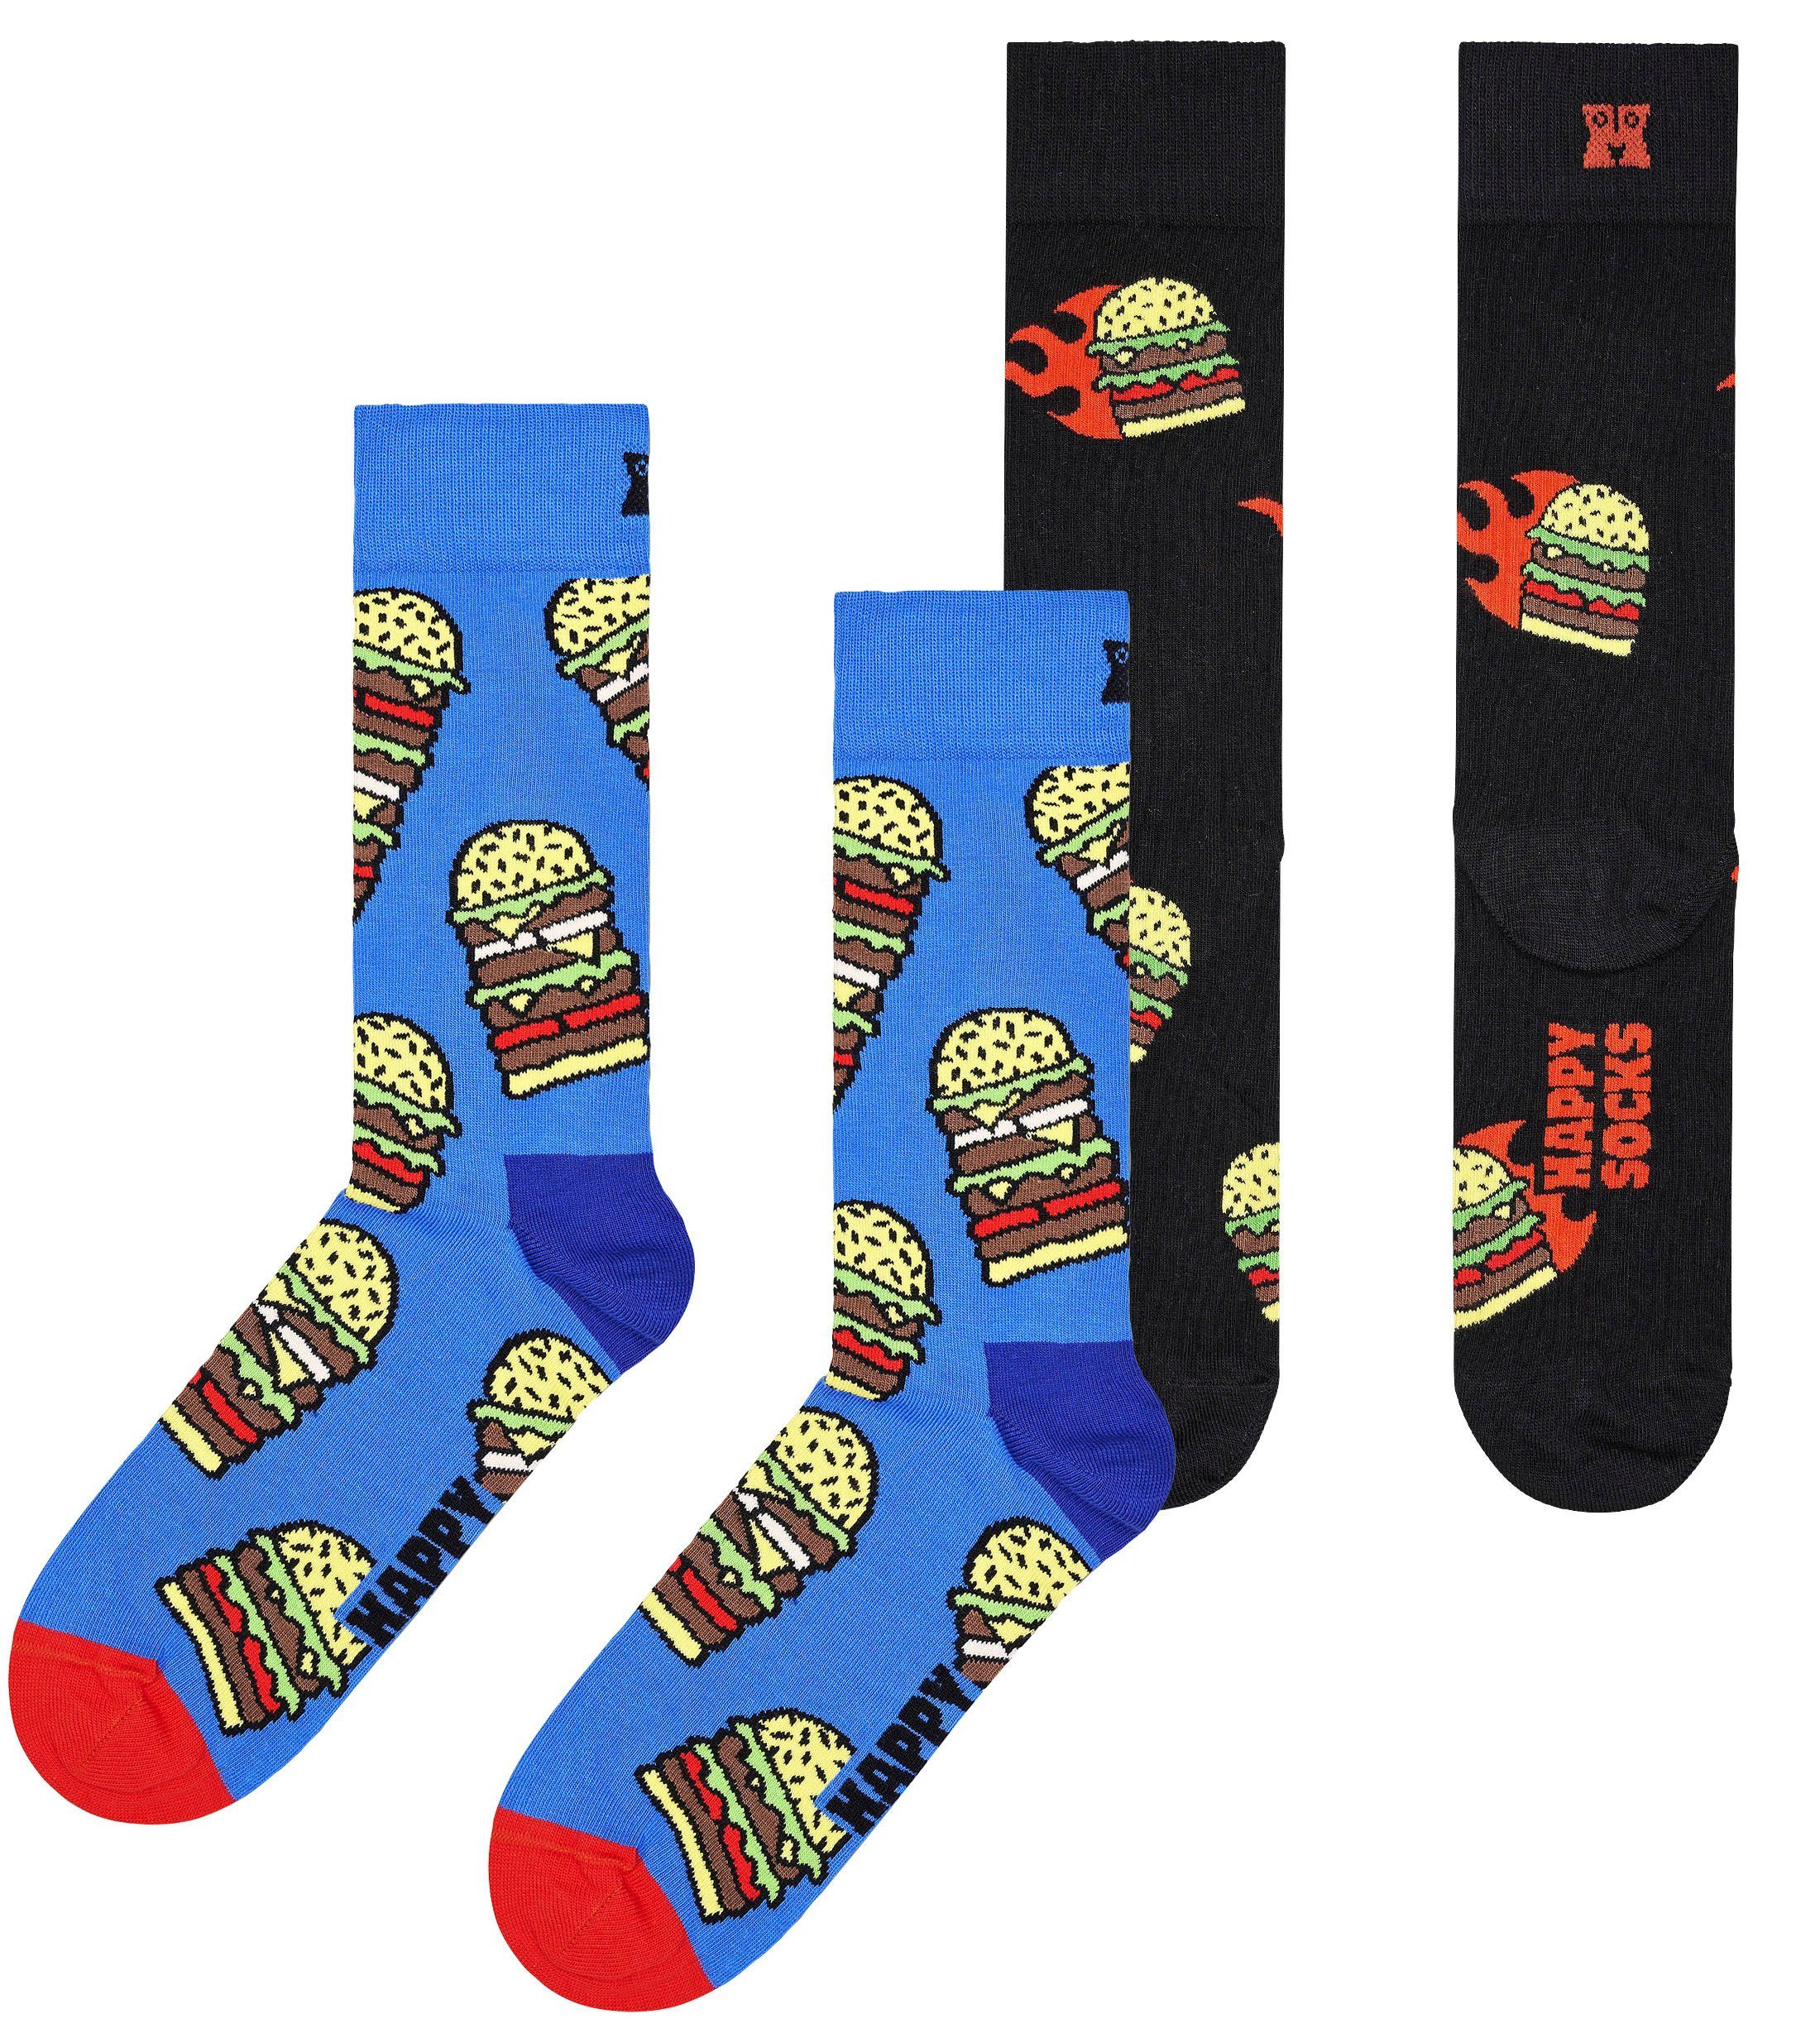 Happy Socks Socken (Packung, 2-Paar) Burger Socks